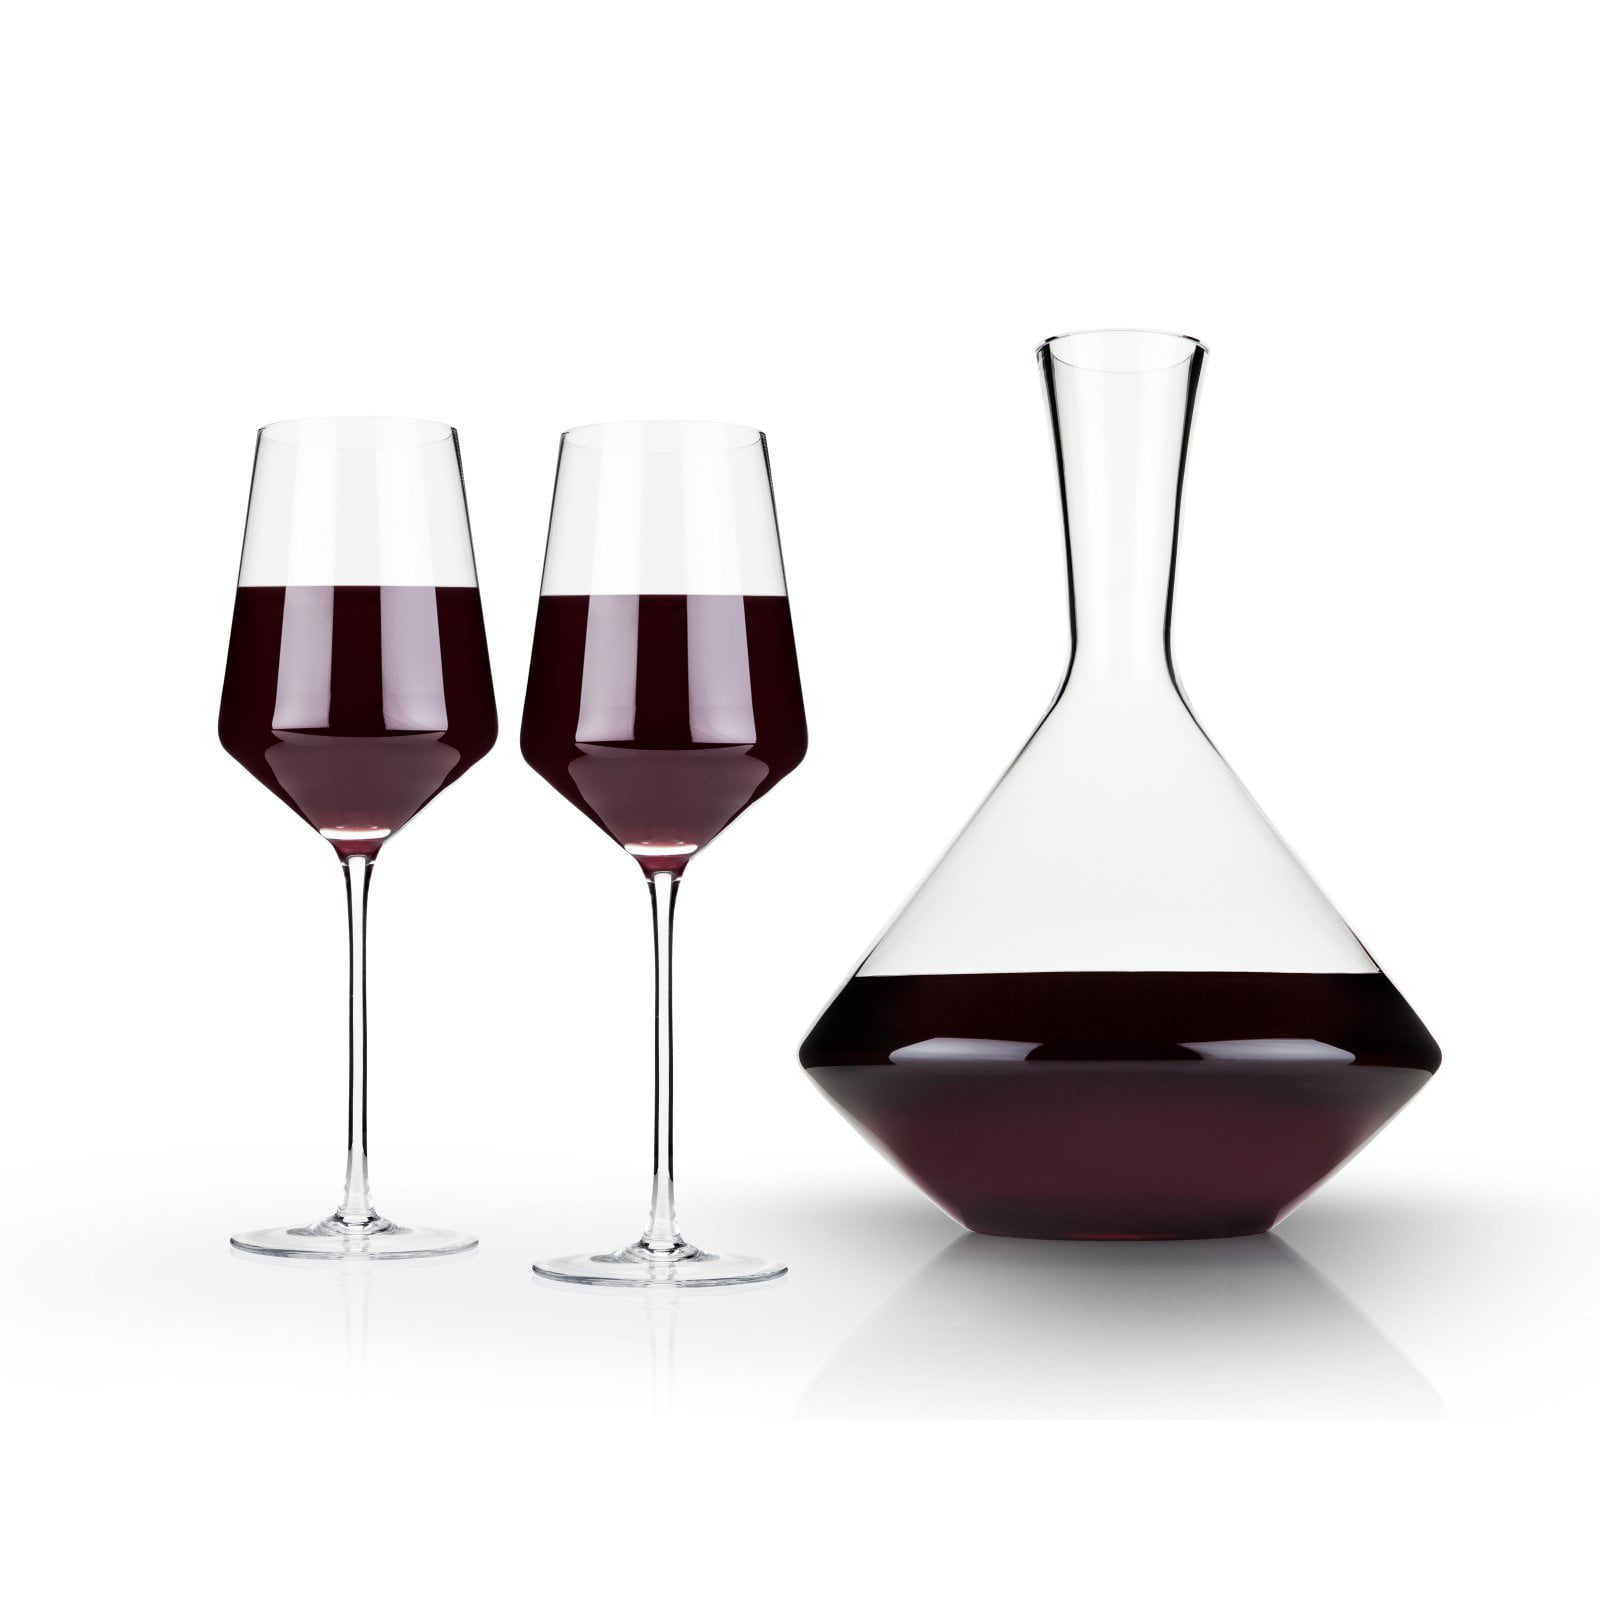 Viski Raye Angled Burgundy Glasses Set Of 2 - Premium Crystal